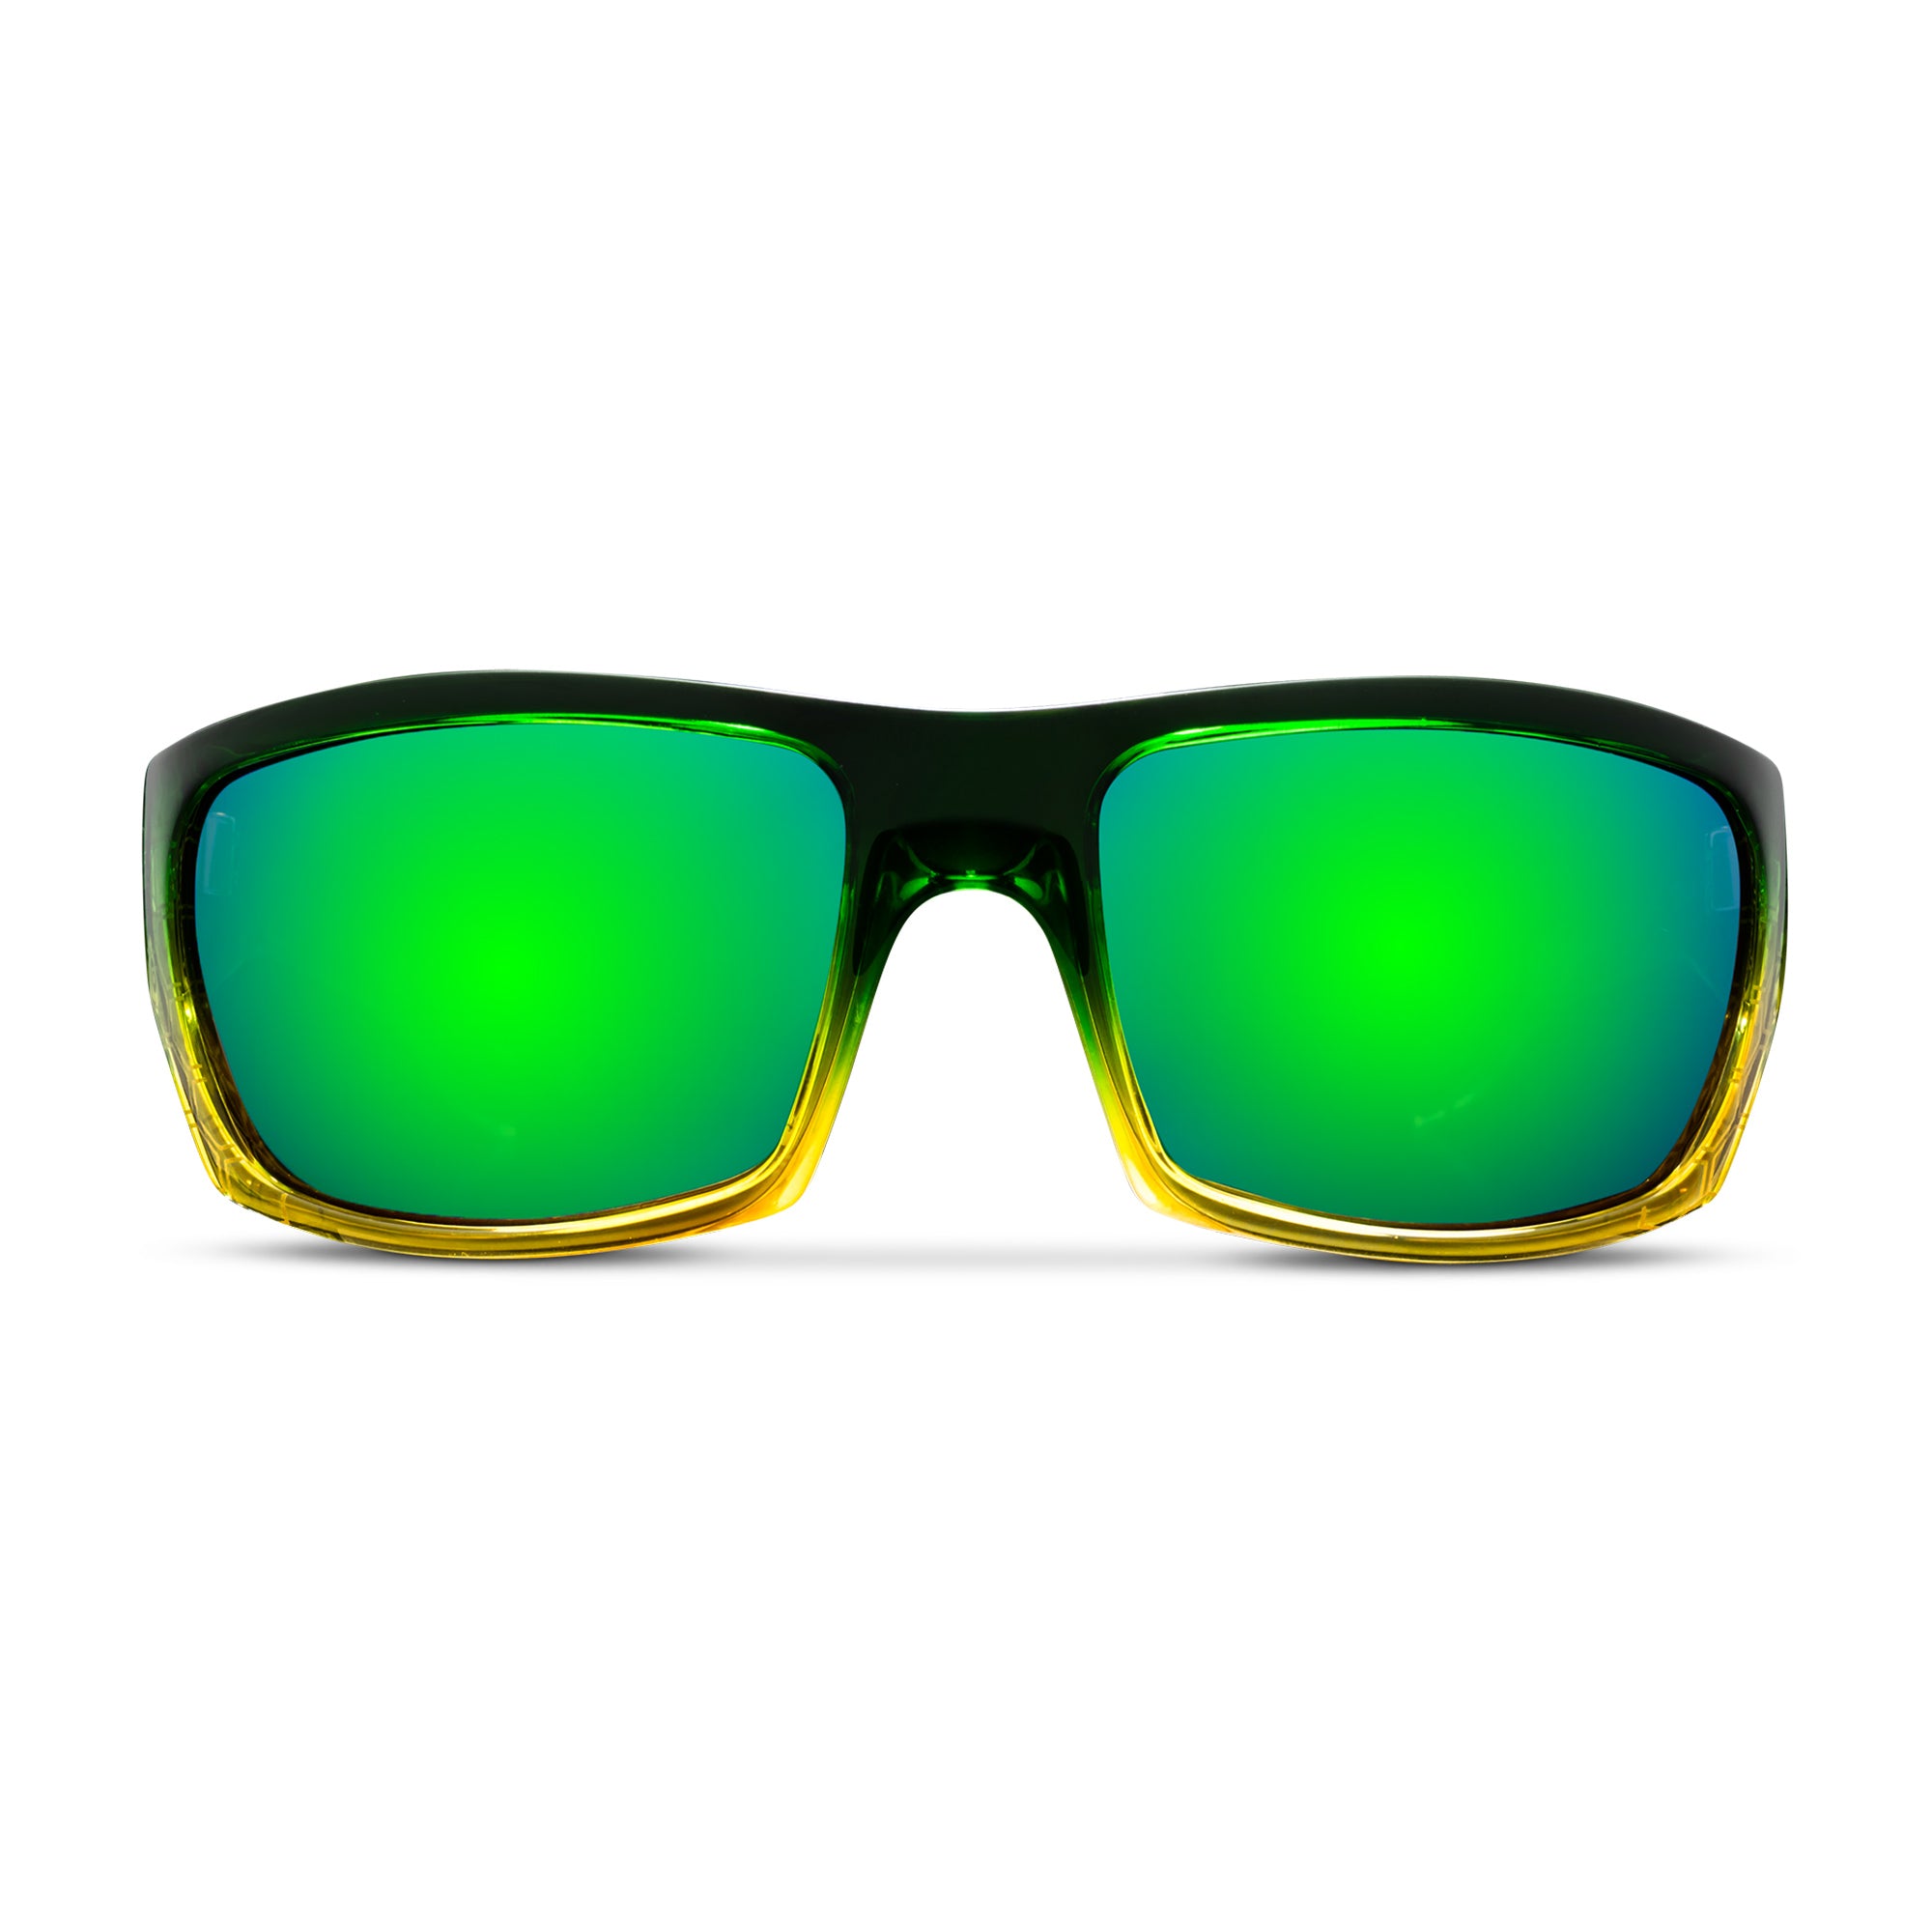 The Mack - Polarized Poly Lens Fishing Sunglasses